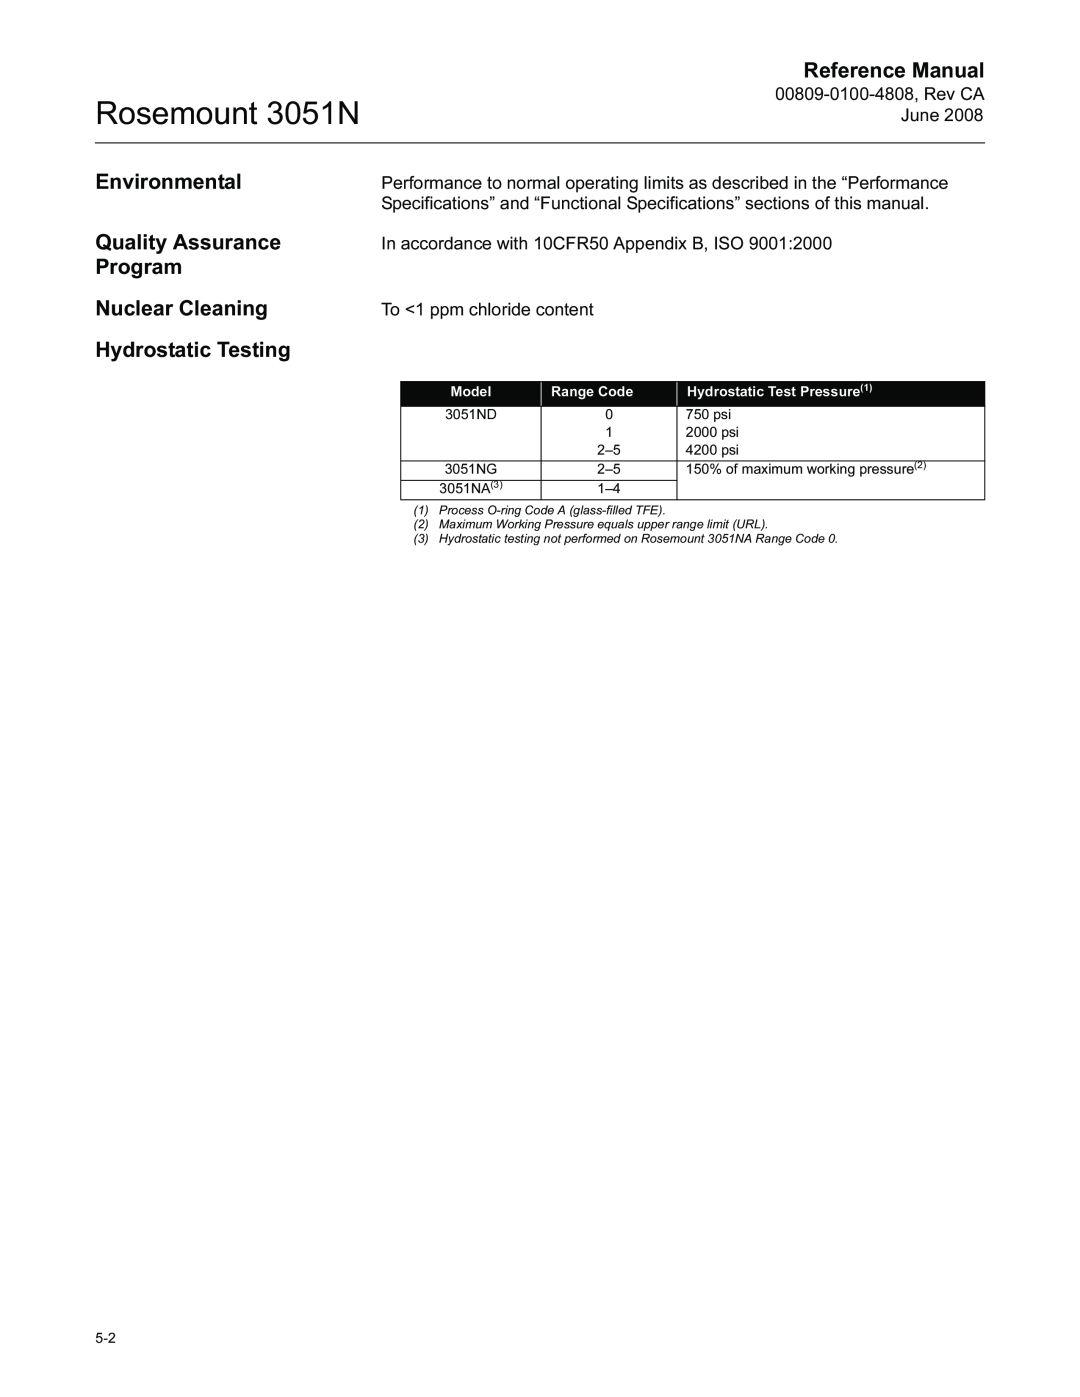 Emerson manual Environmental Quality Assurance Program, Nuclear Cleaning Hydrostatic Testing, Rosemount 3051N 